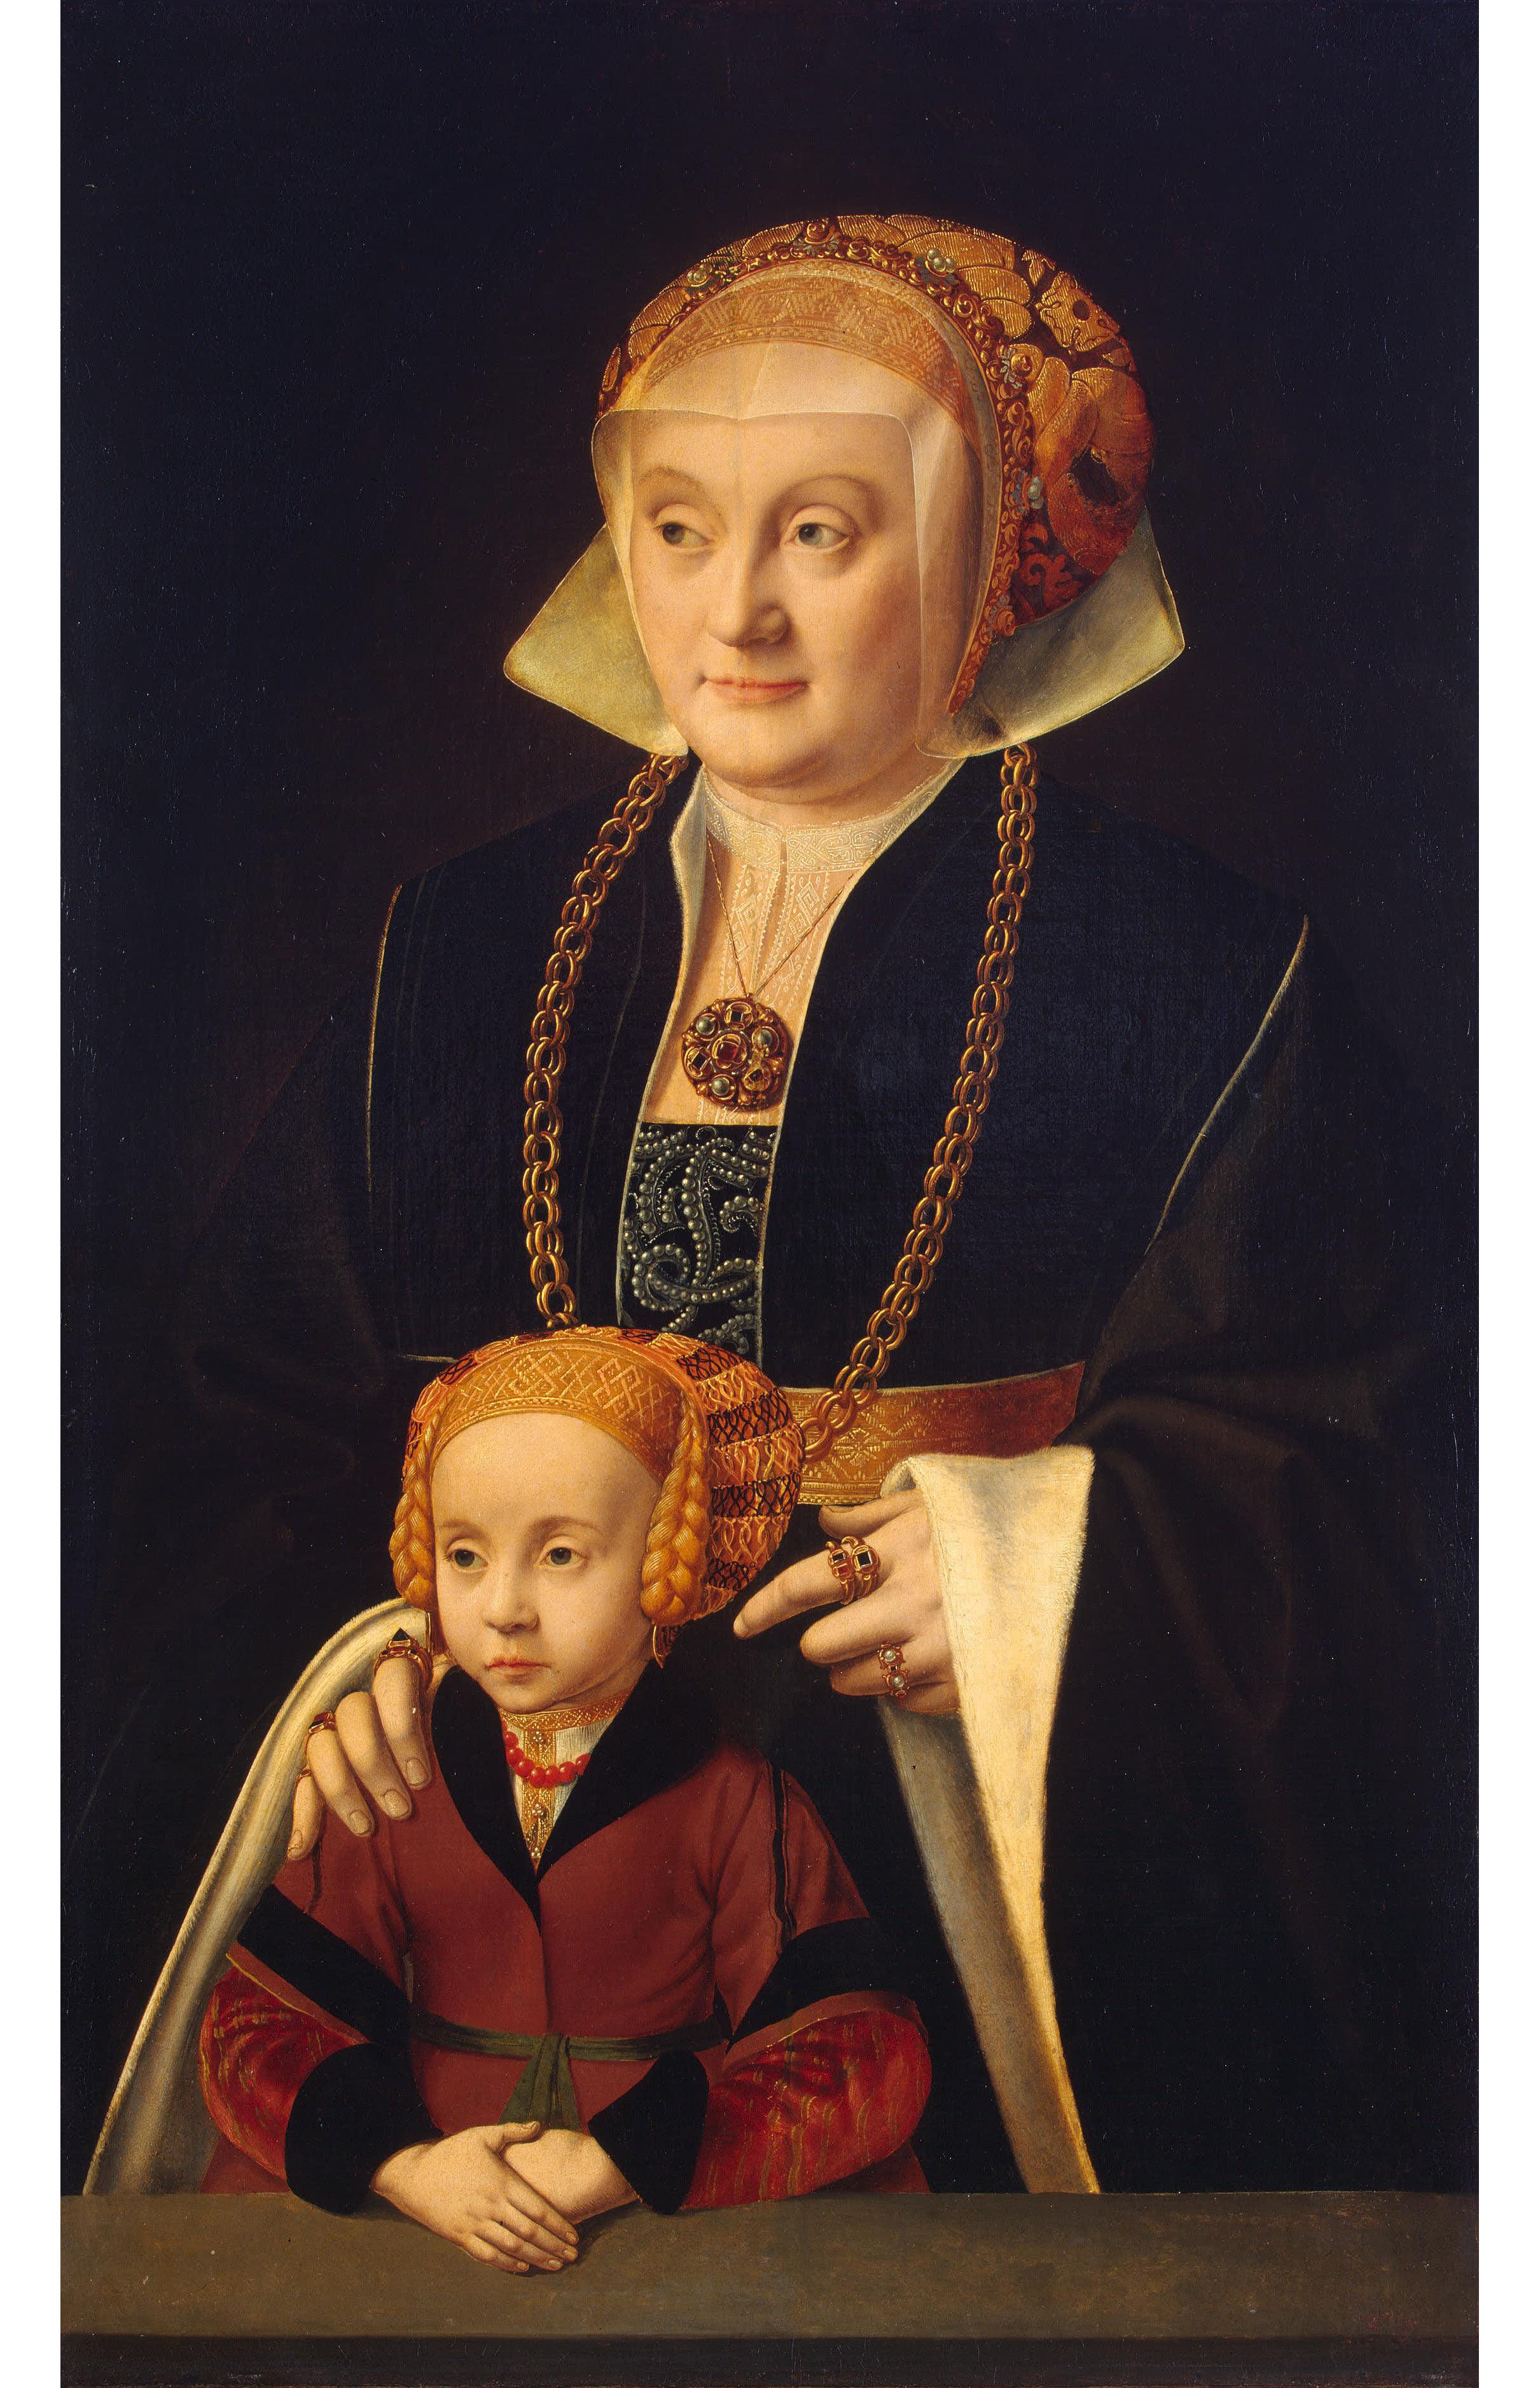 Бартоломеус Брейн Старший. "Портрет дамы с дочерью". Конец 1530-х - начало 1540-х. Эрмитаж, Санкт-Петербург.